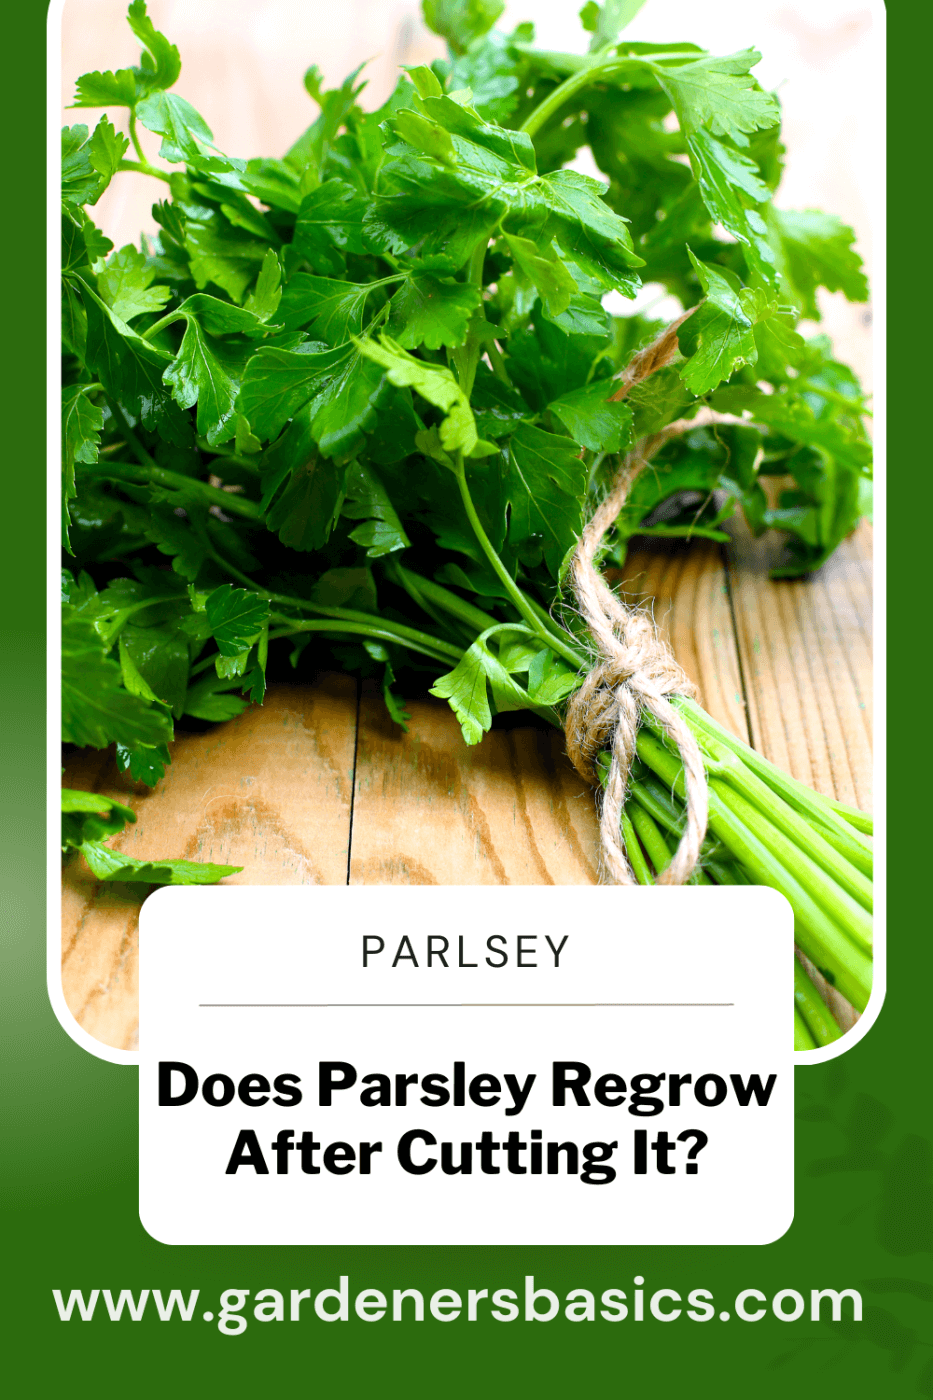 harvesting parsley